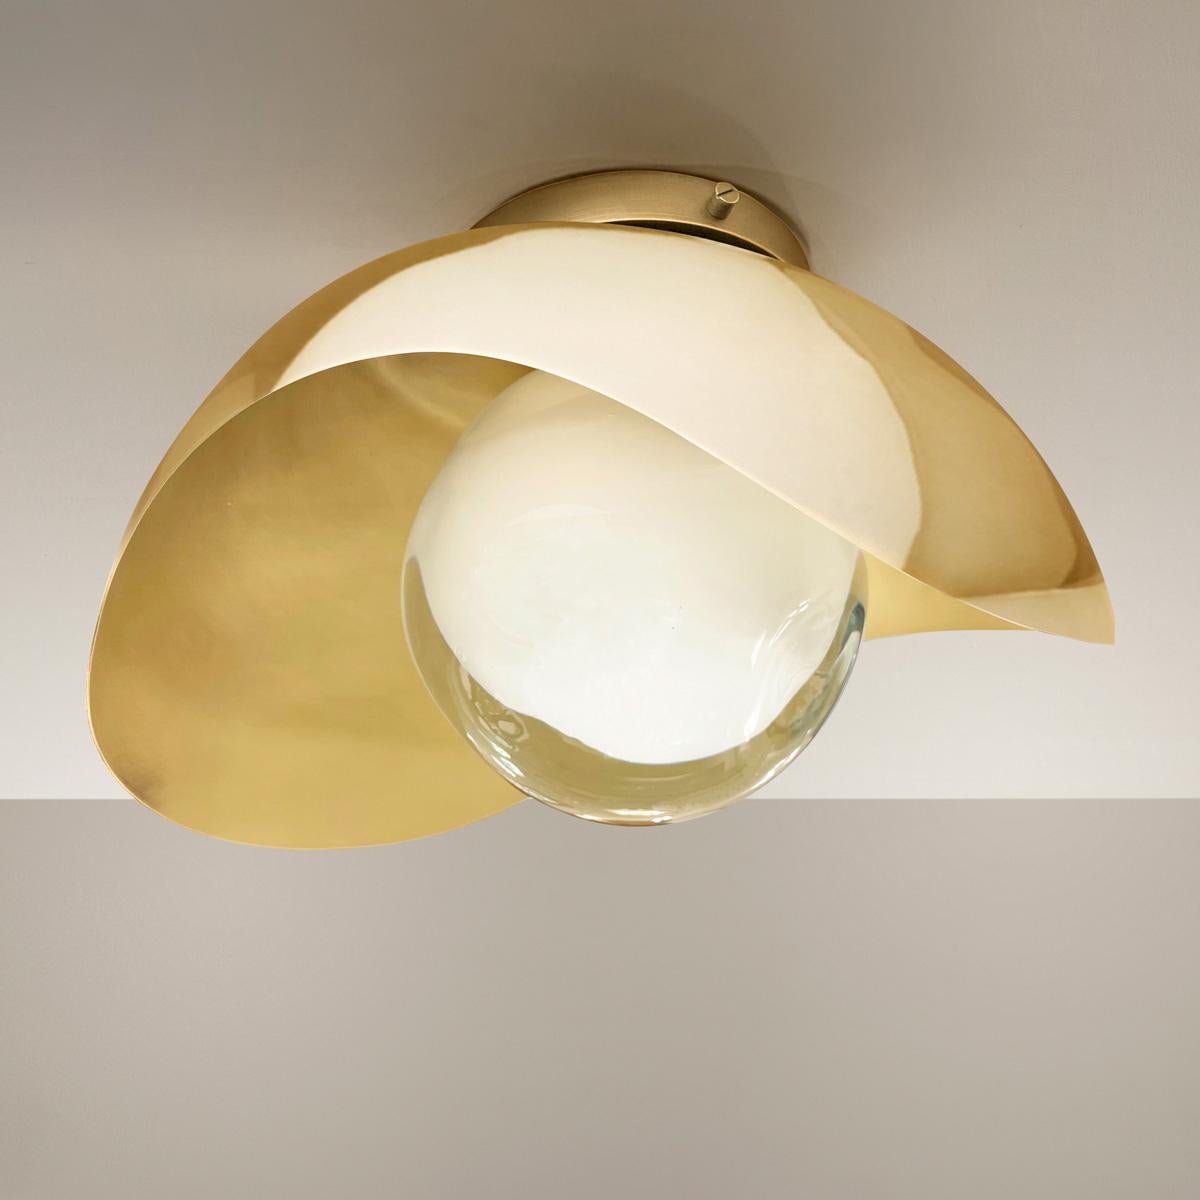 Perla Flushmount Ceiling Light by Gaspare Asaro-Satin Brass/Bronze Finish. For Sale 4